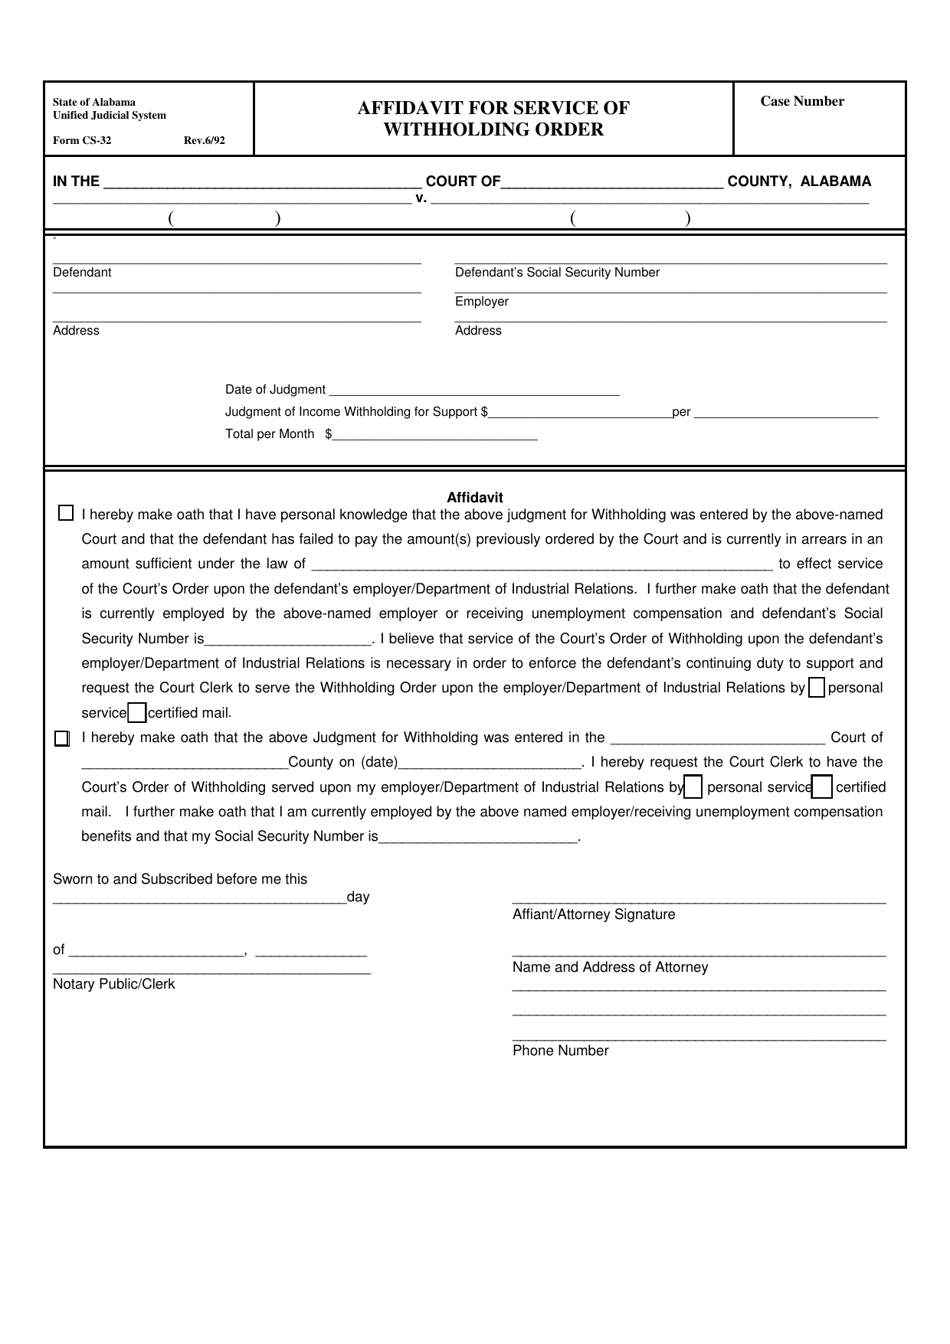 Form CS-32 Affidavit for Service of Withholding Order - Alabama, Page 1